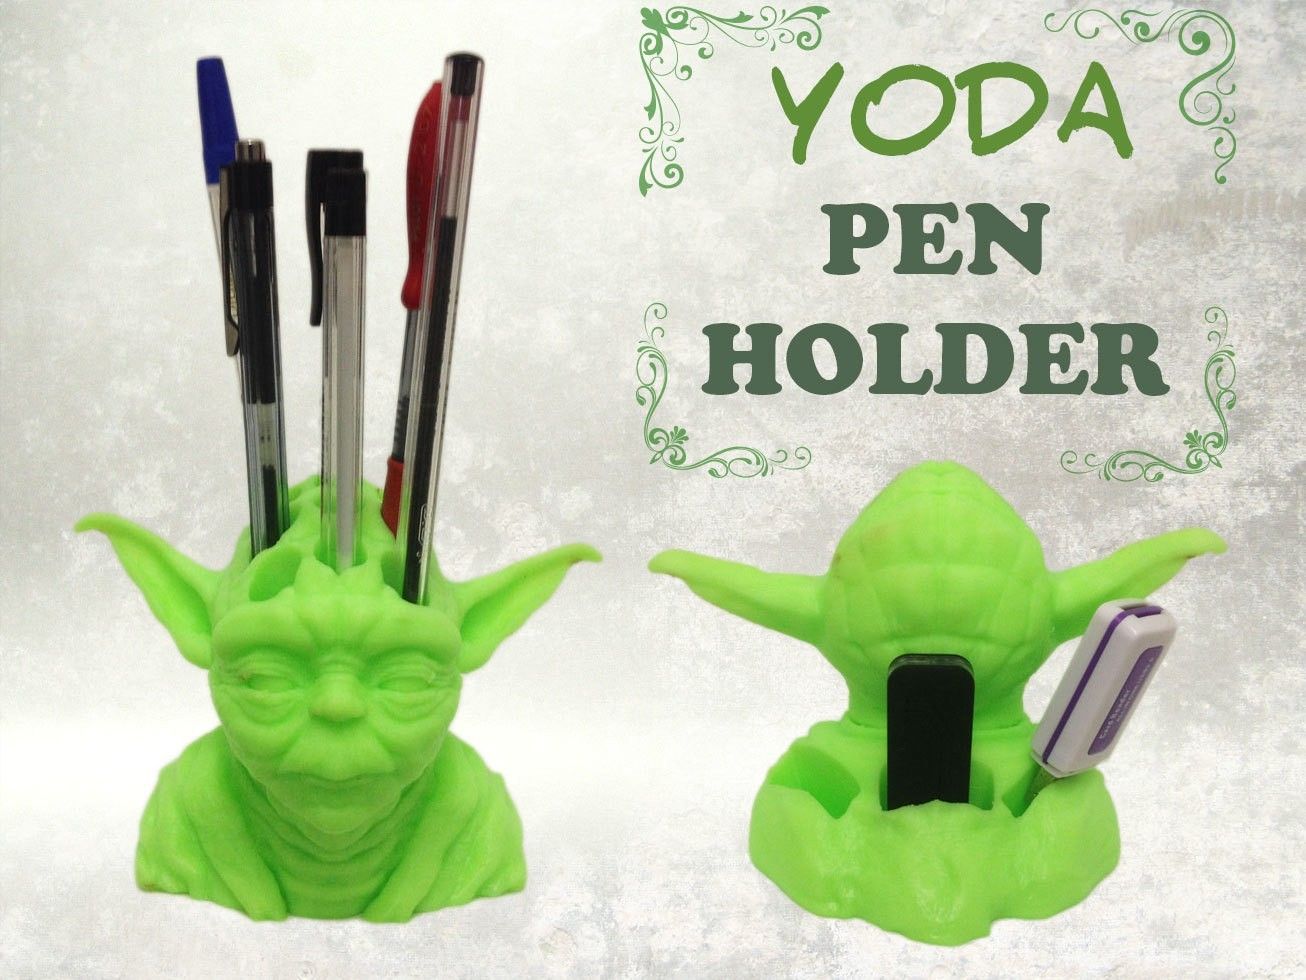 yoda-pen-holder-fb.jpg Download STL file Yoda Pen Holder • 3D printing design, Custom3DPrinting